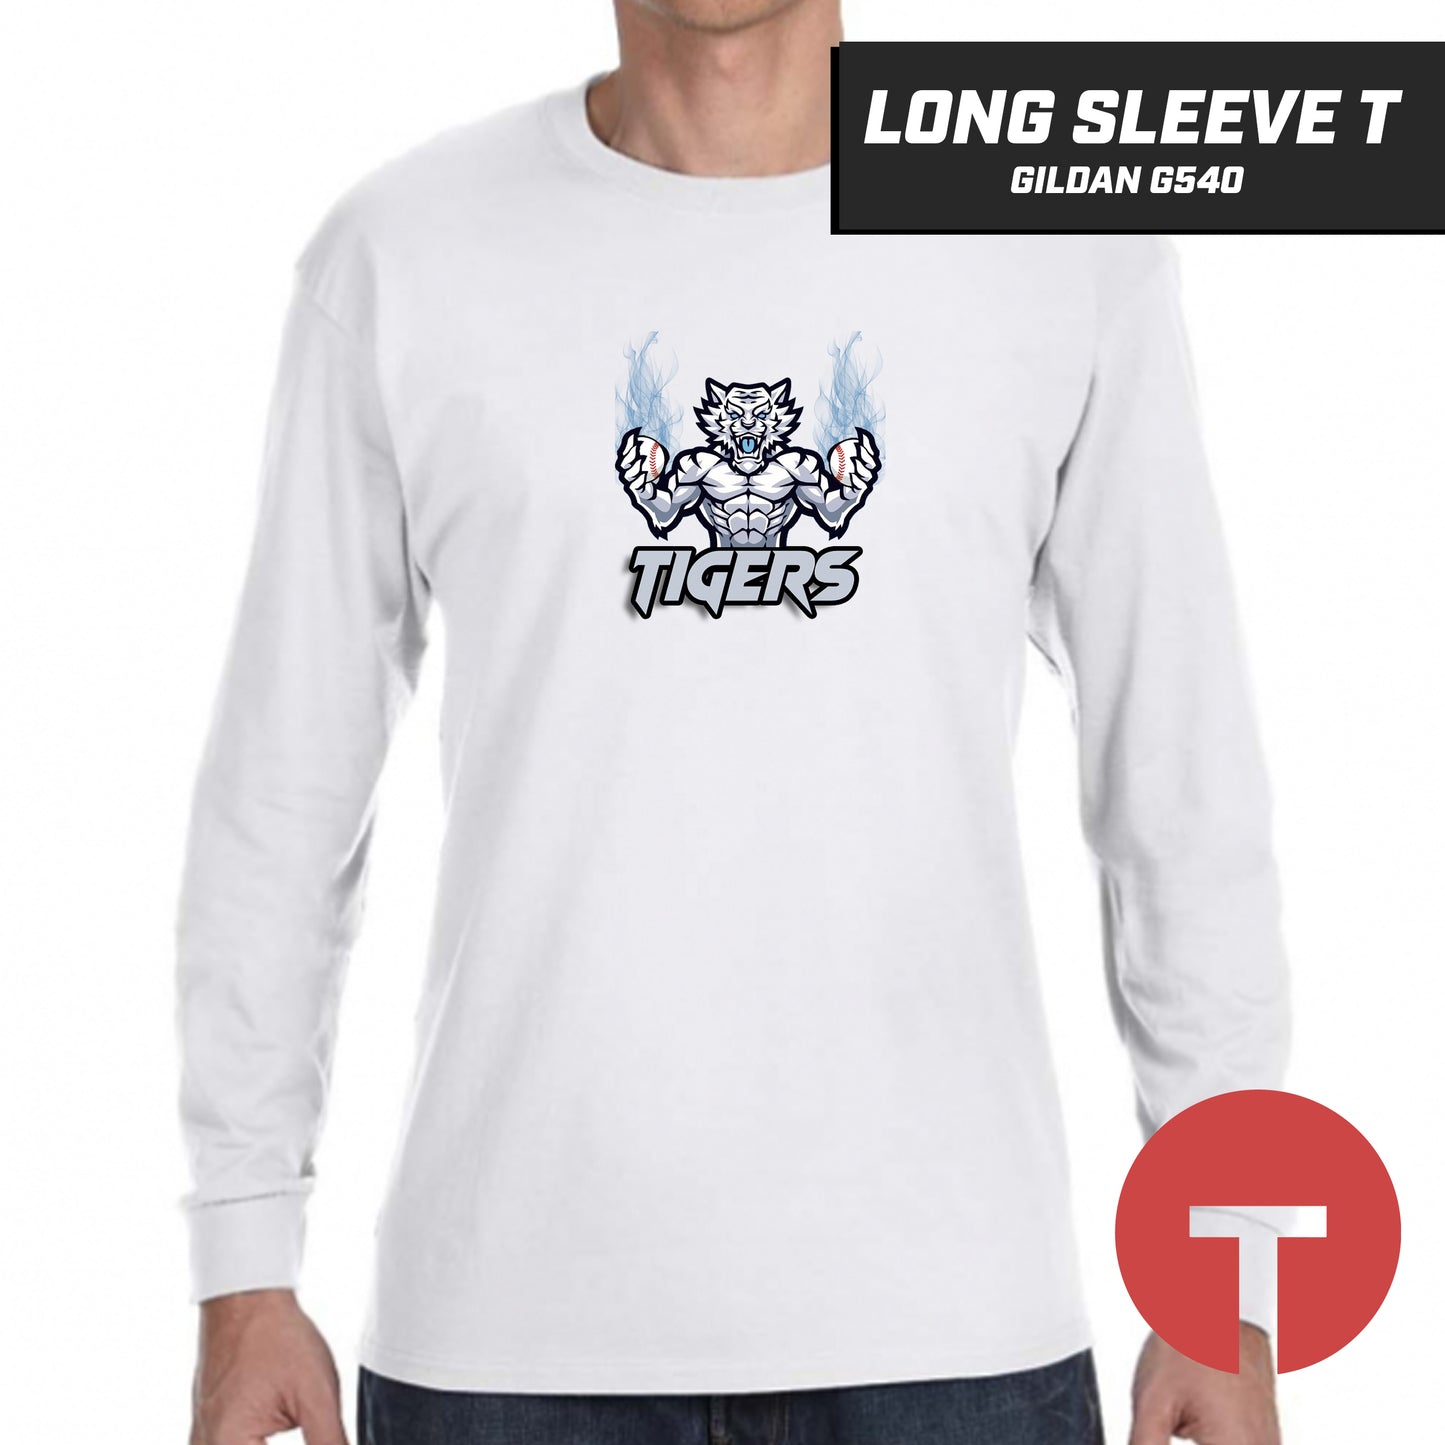 Tigers J Leon - Long-Sleeve T-Shirt Gildan G540